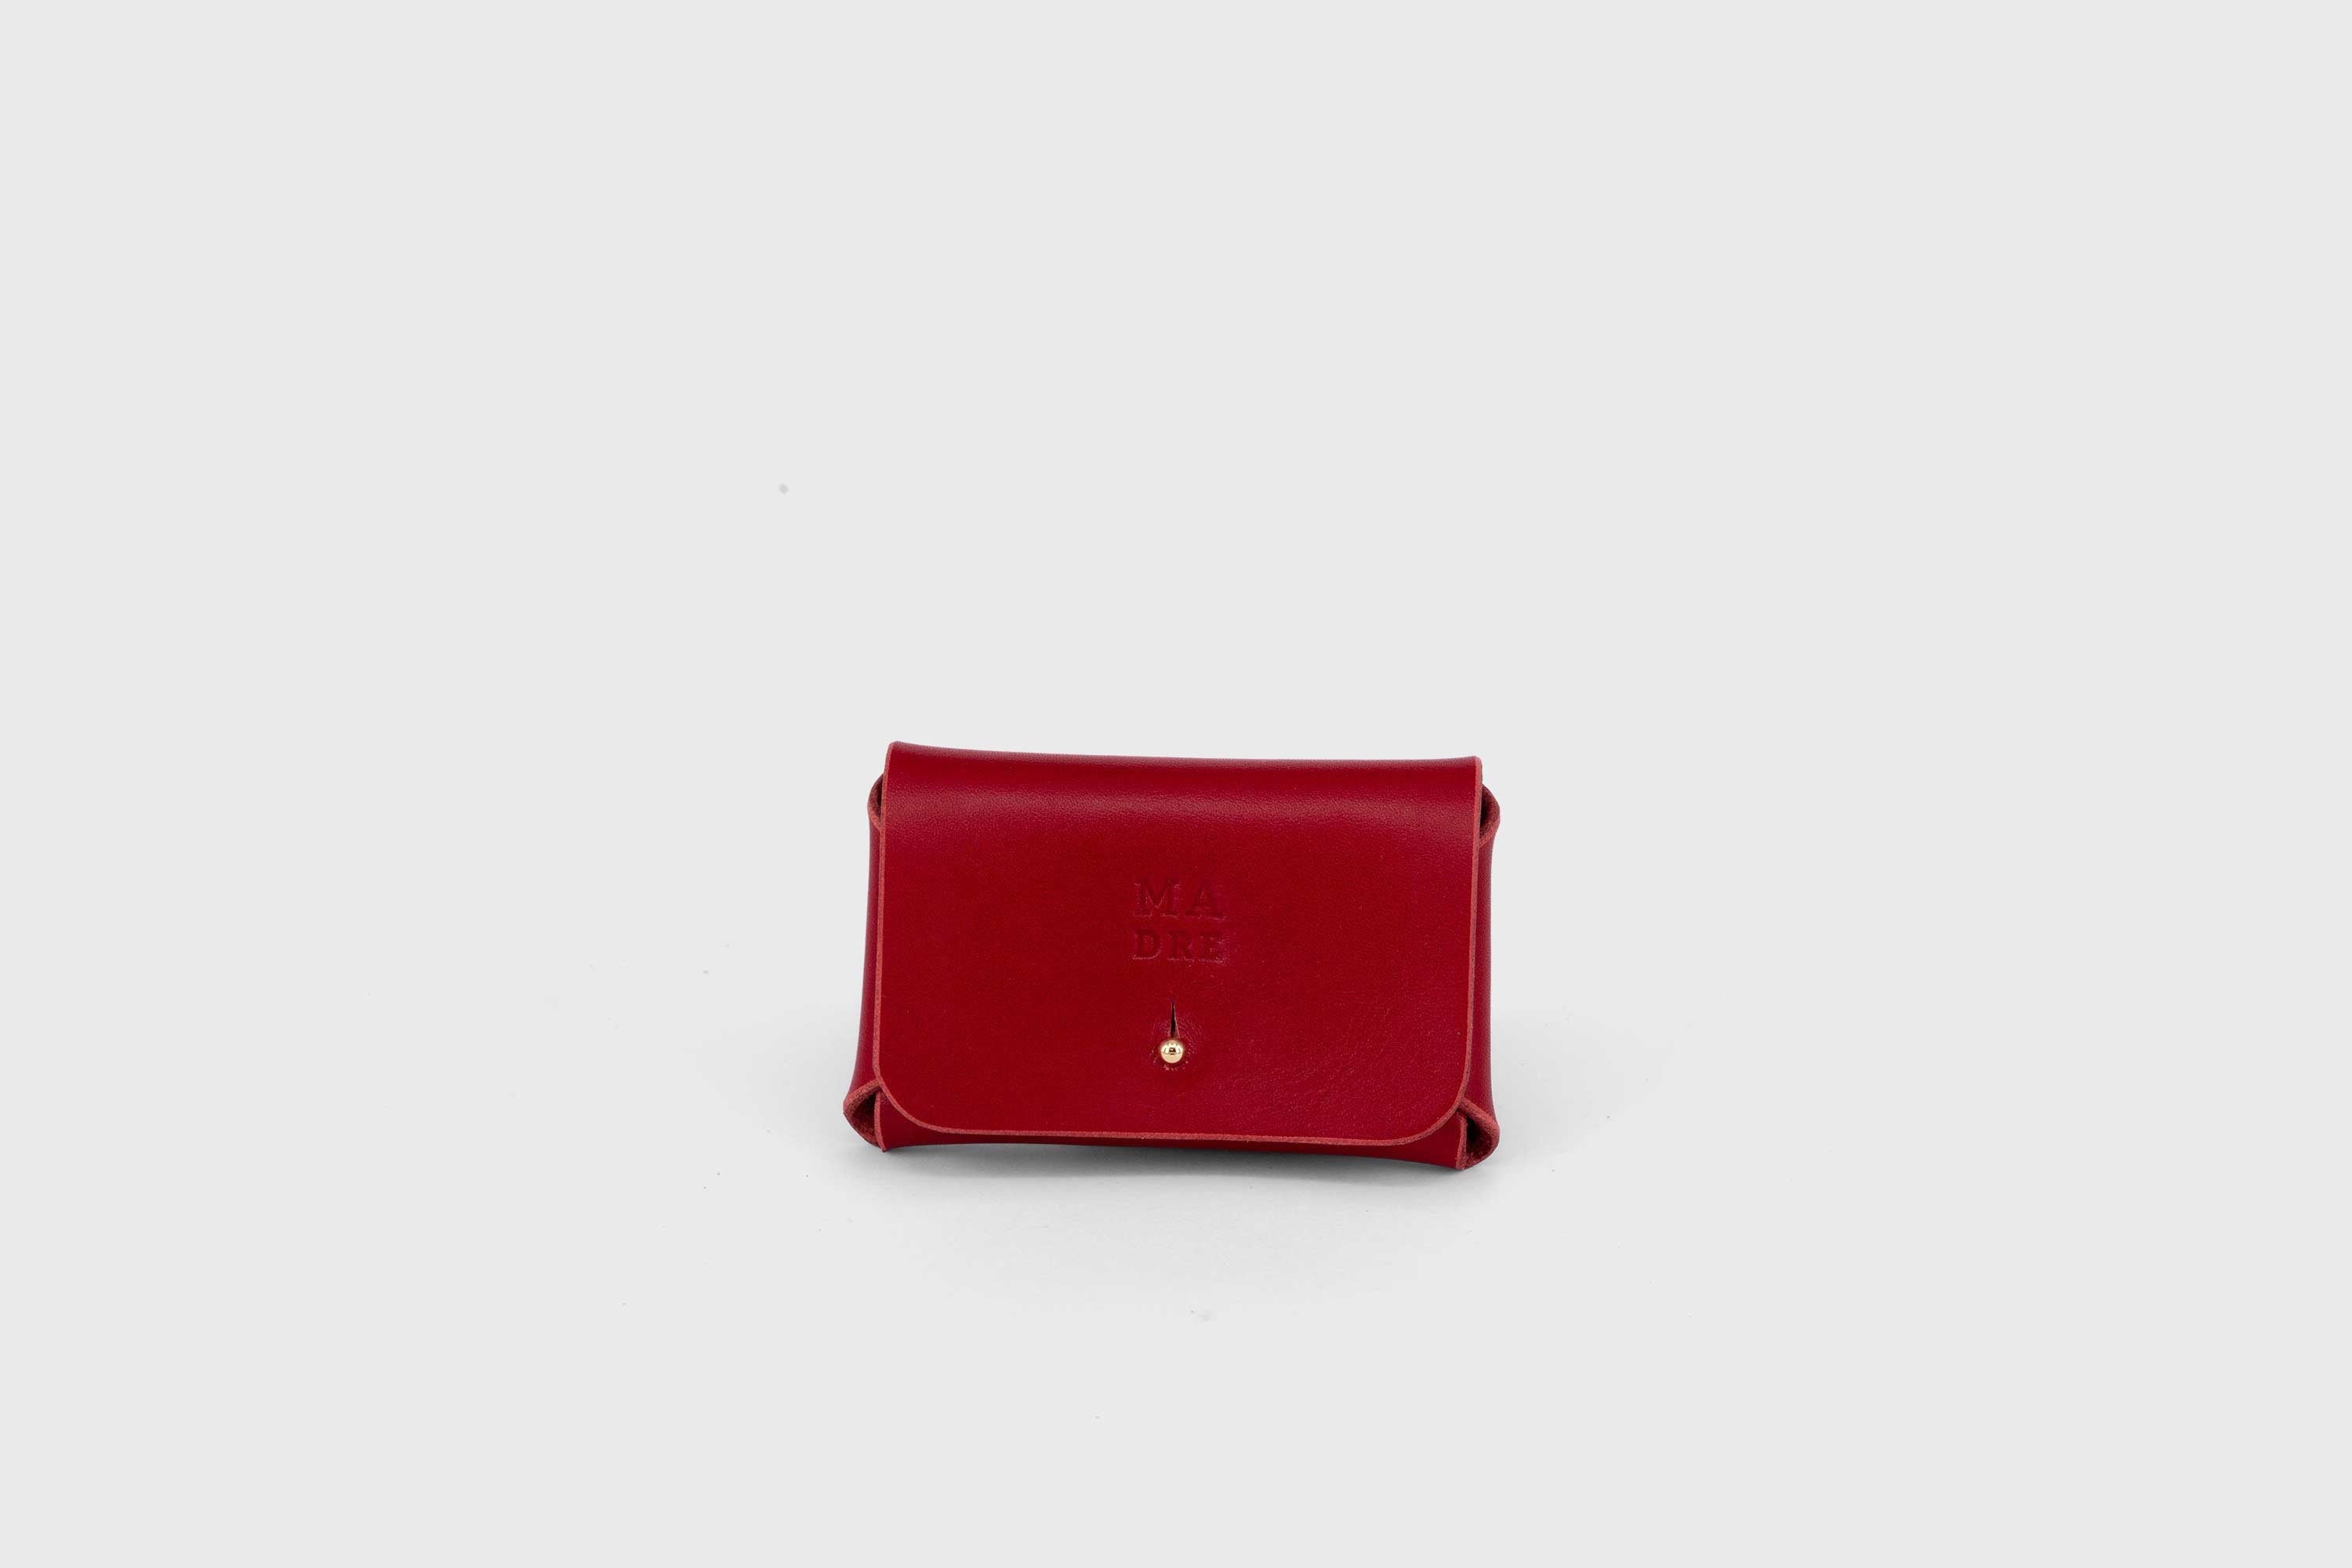 leather wallet red Manuel Dreesmann atelier madre Barcelona